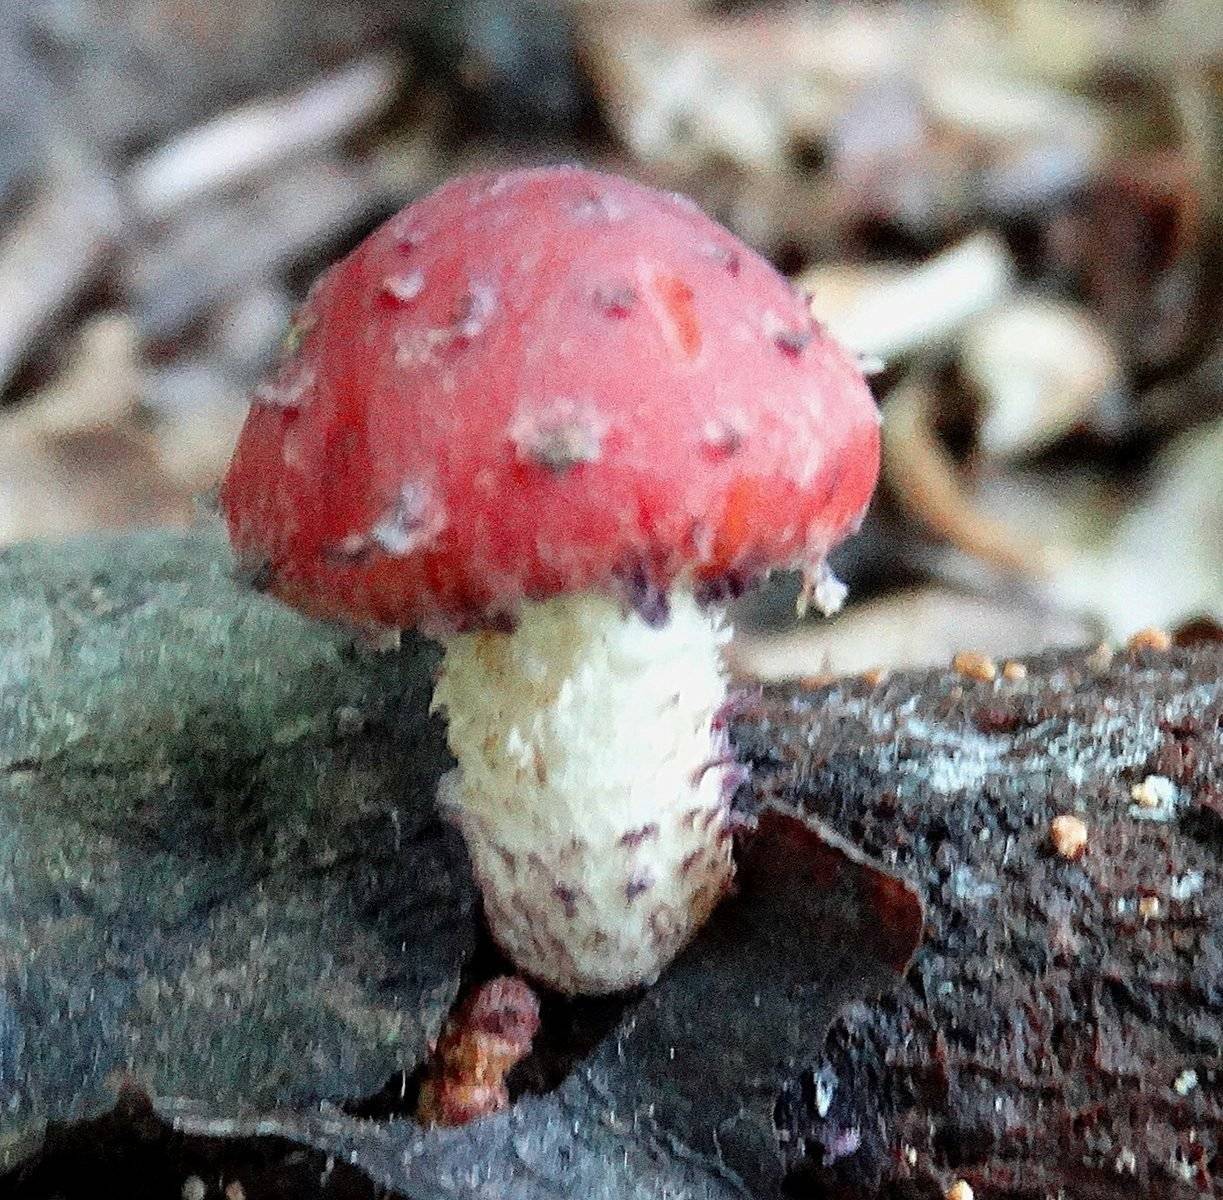 Чешуйчатка шафранно-красная (pholiota astragalina) – грибы сибири